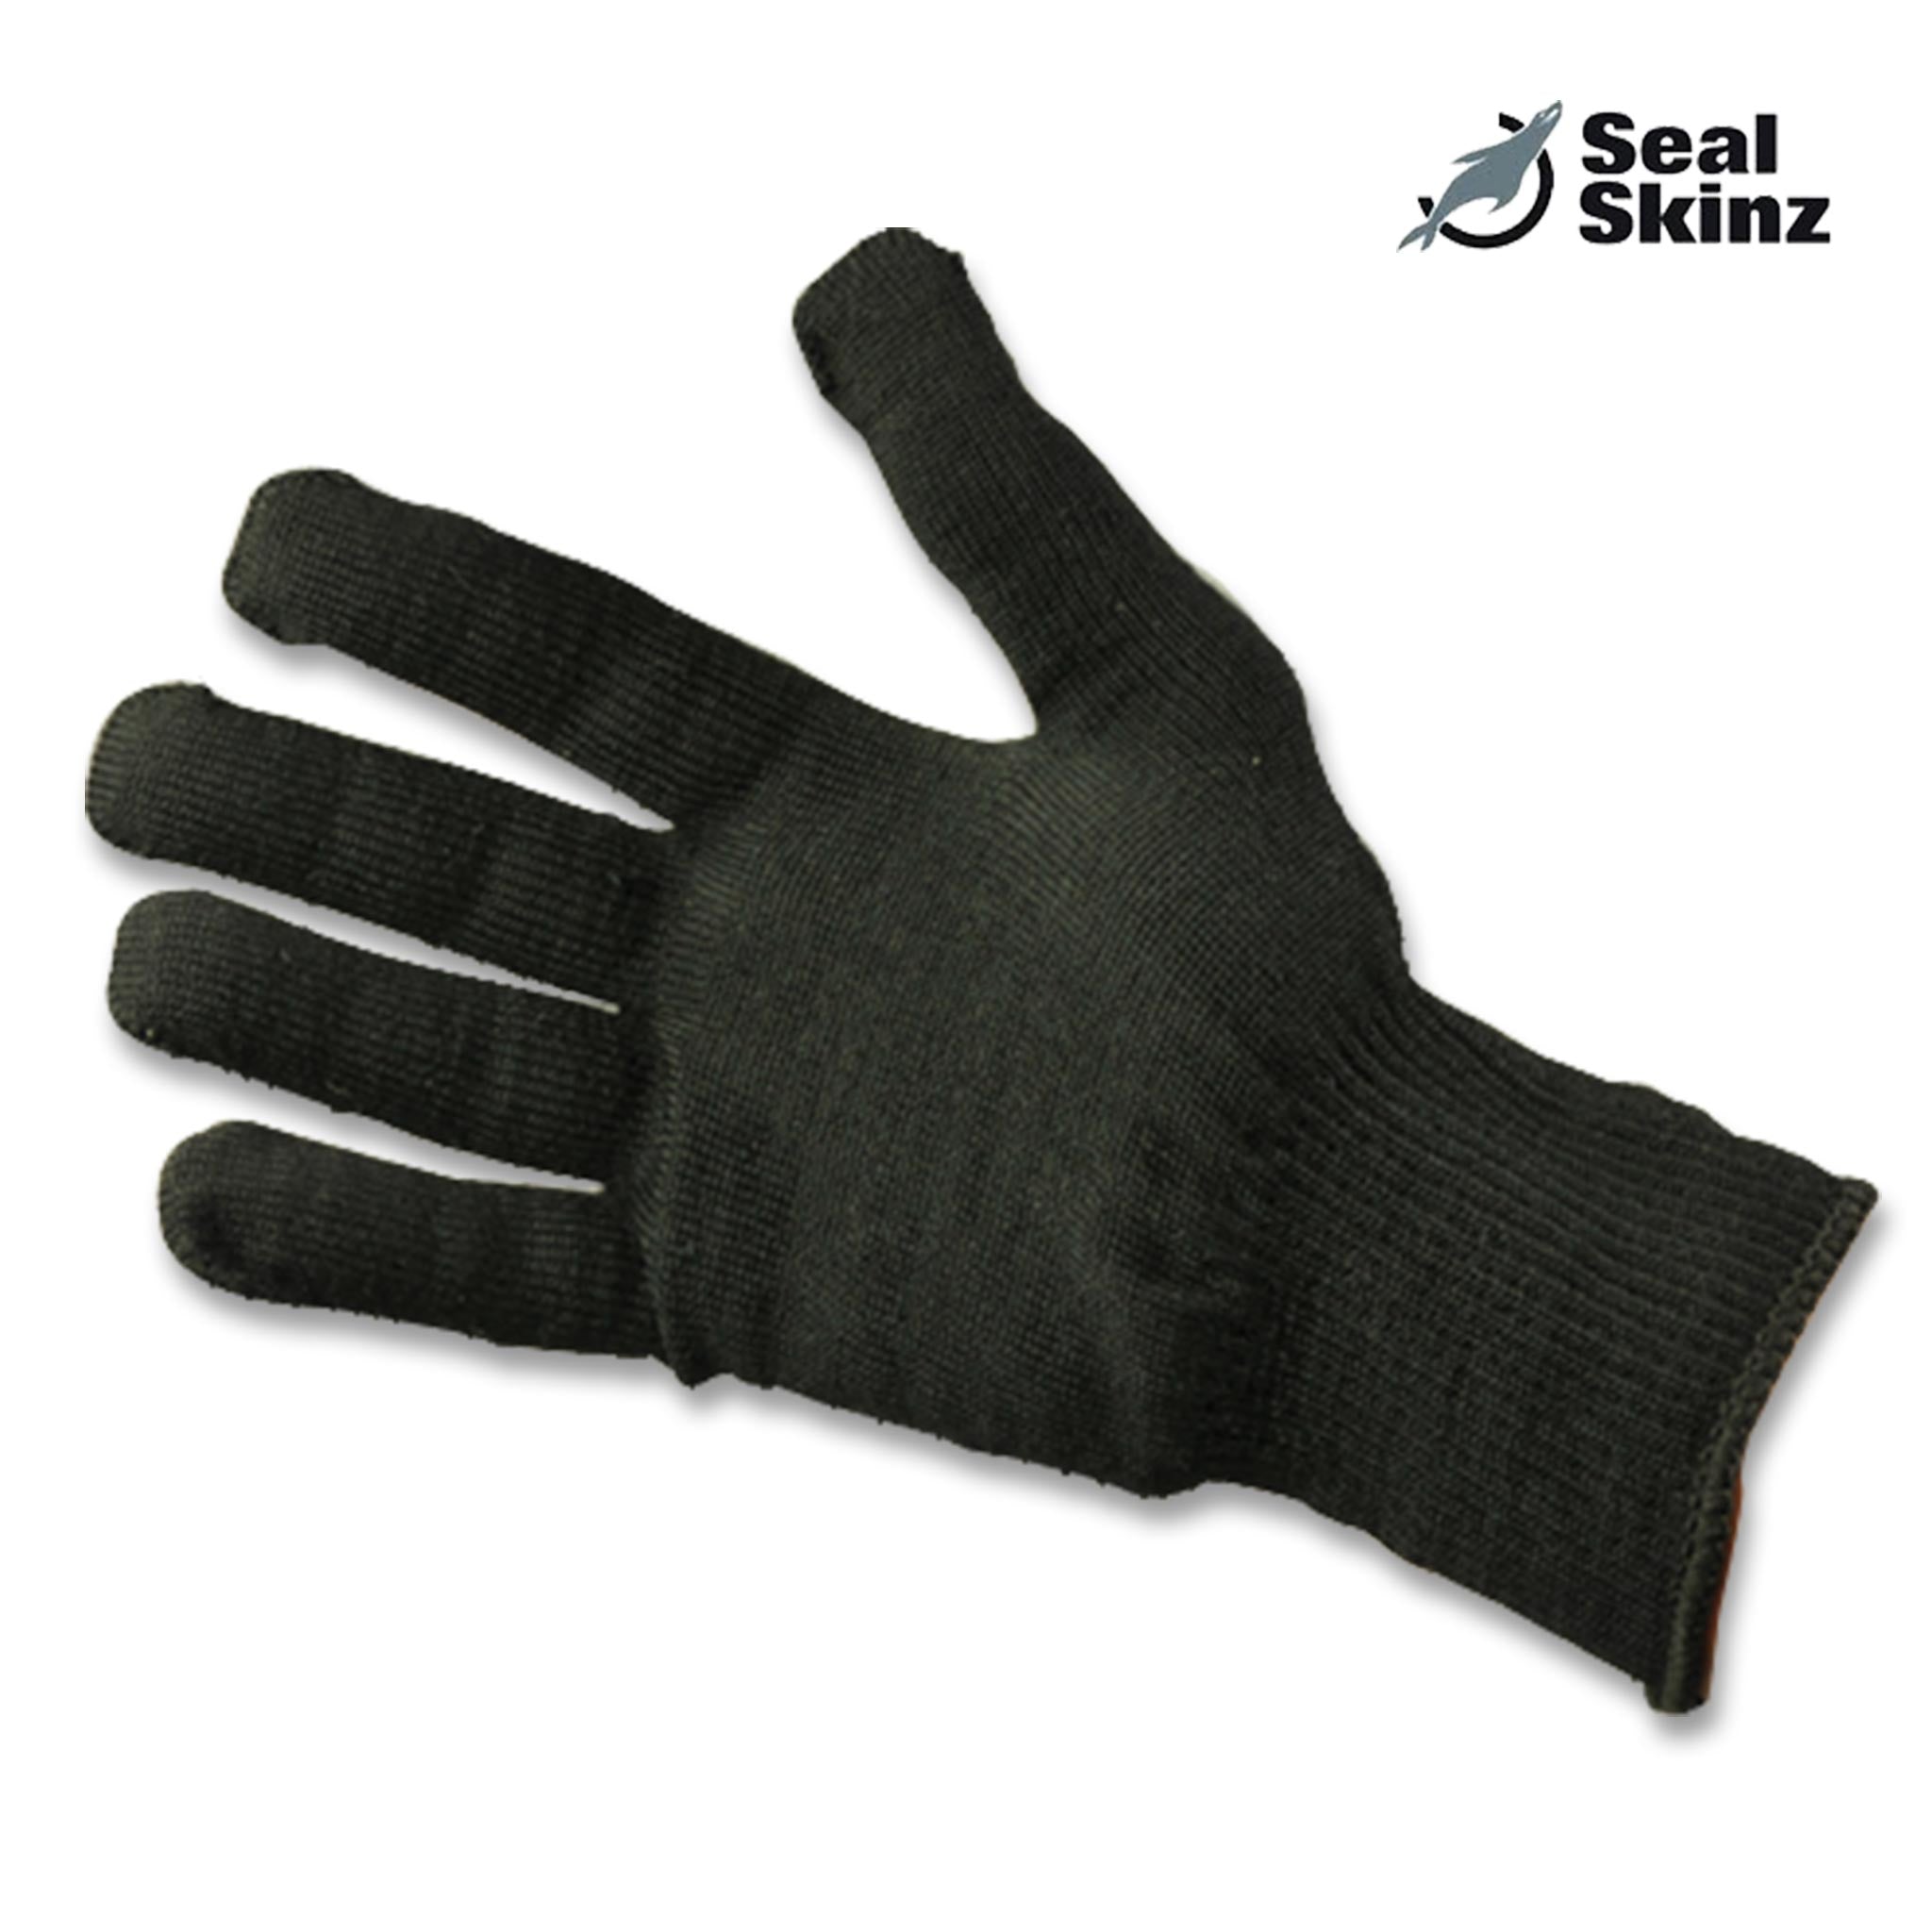 Glove Liners - Sealskinz